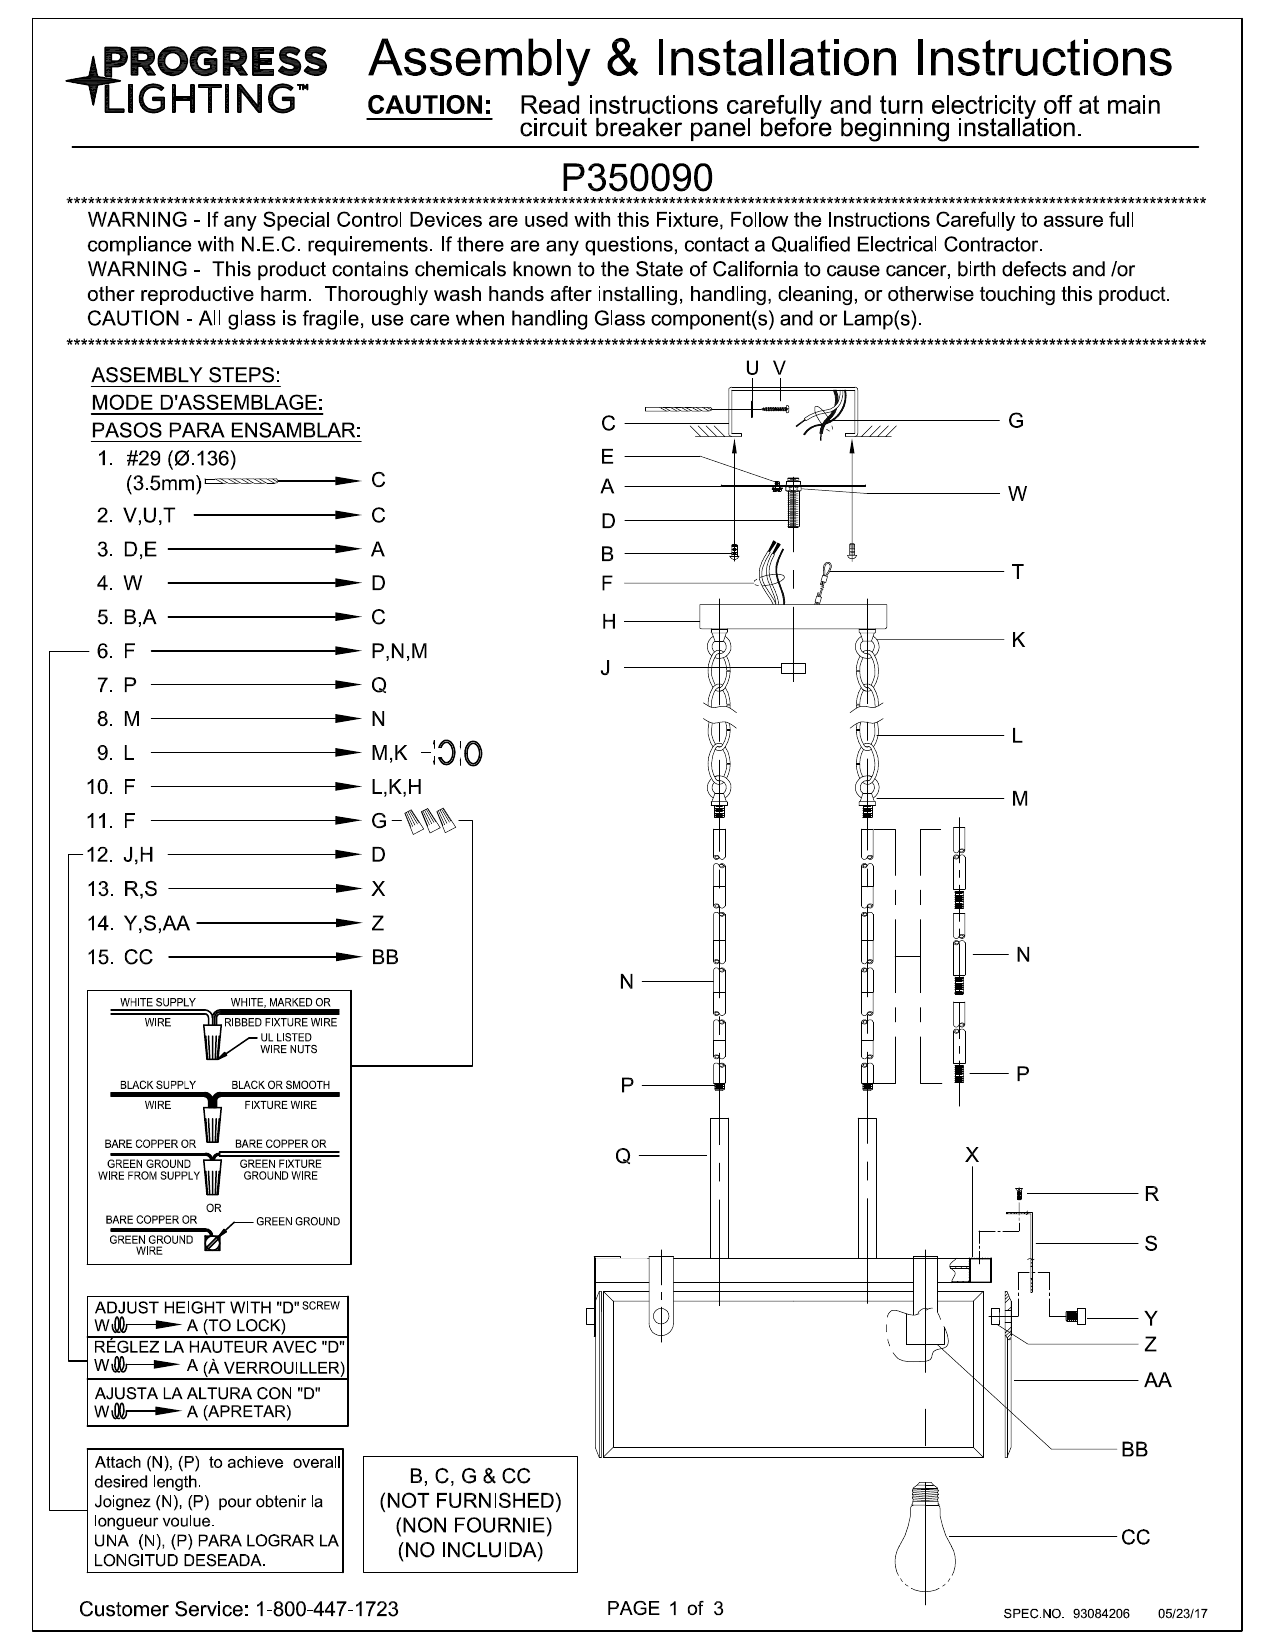 Progress Lighting P 009 Installation Guide Manualzz